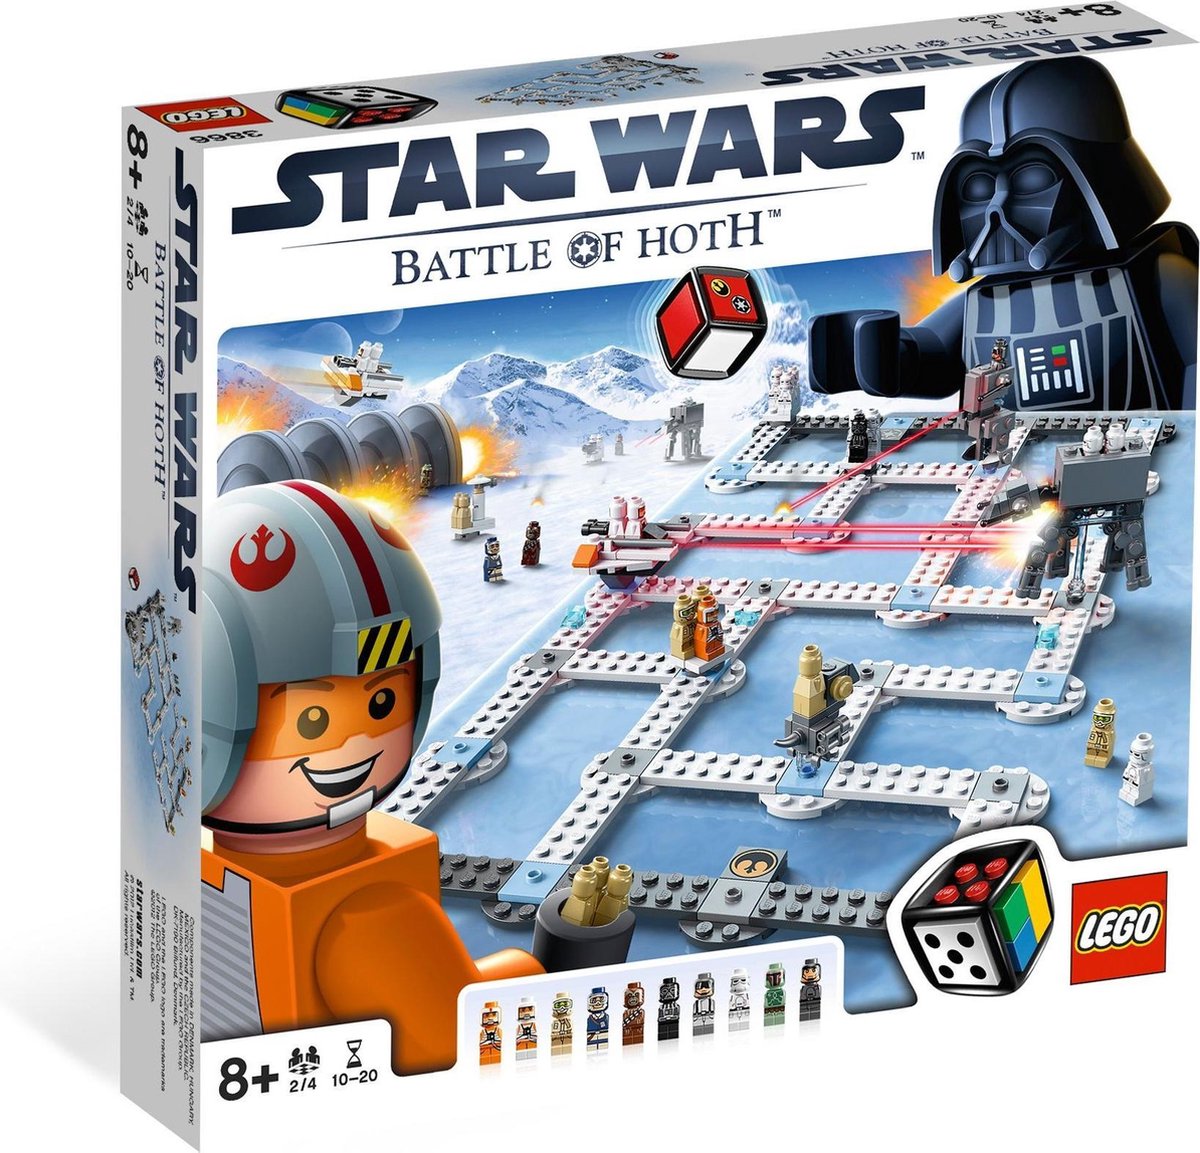 LEGO Star Wars Spel De Slag om Hoth - 3866 | bol.com